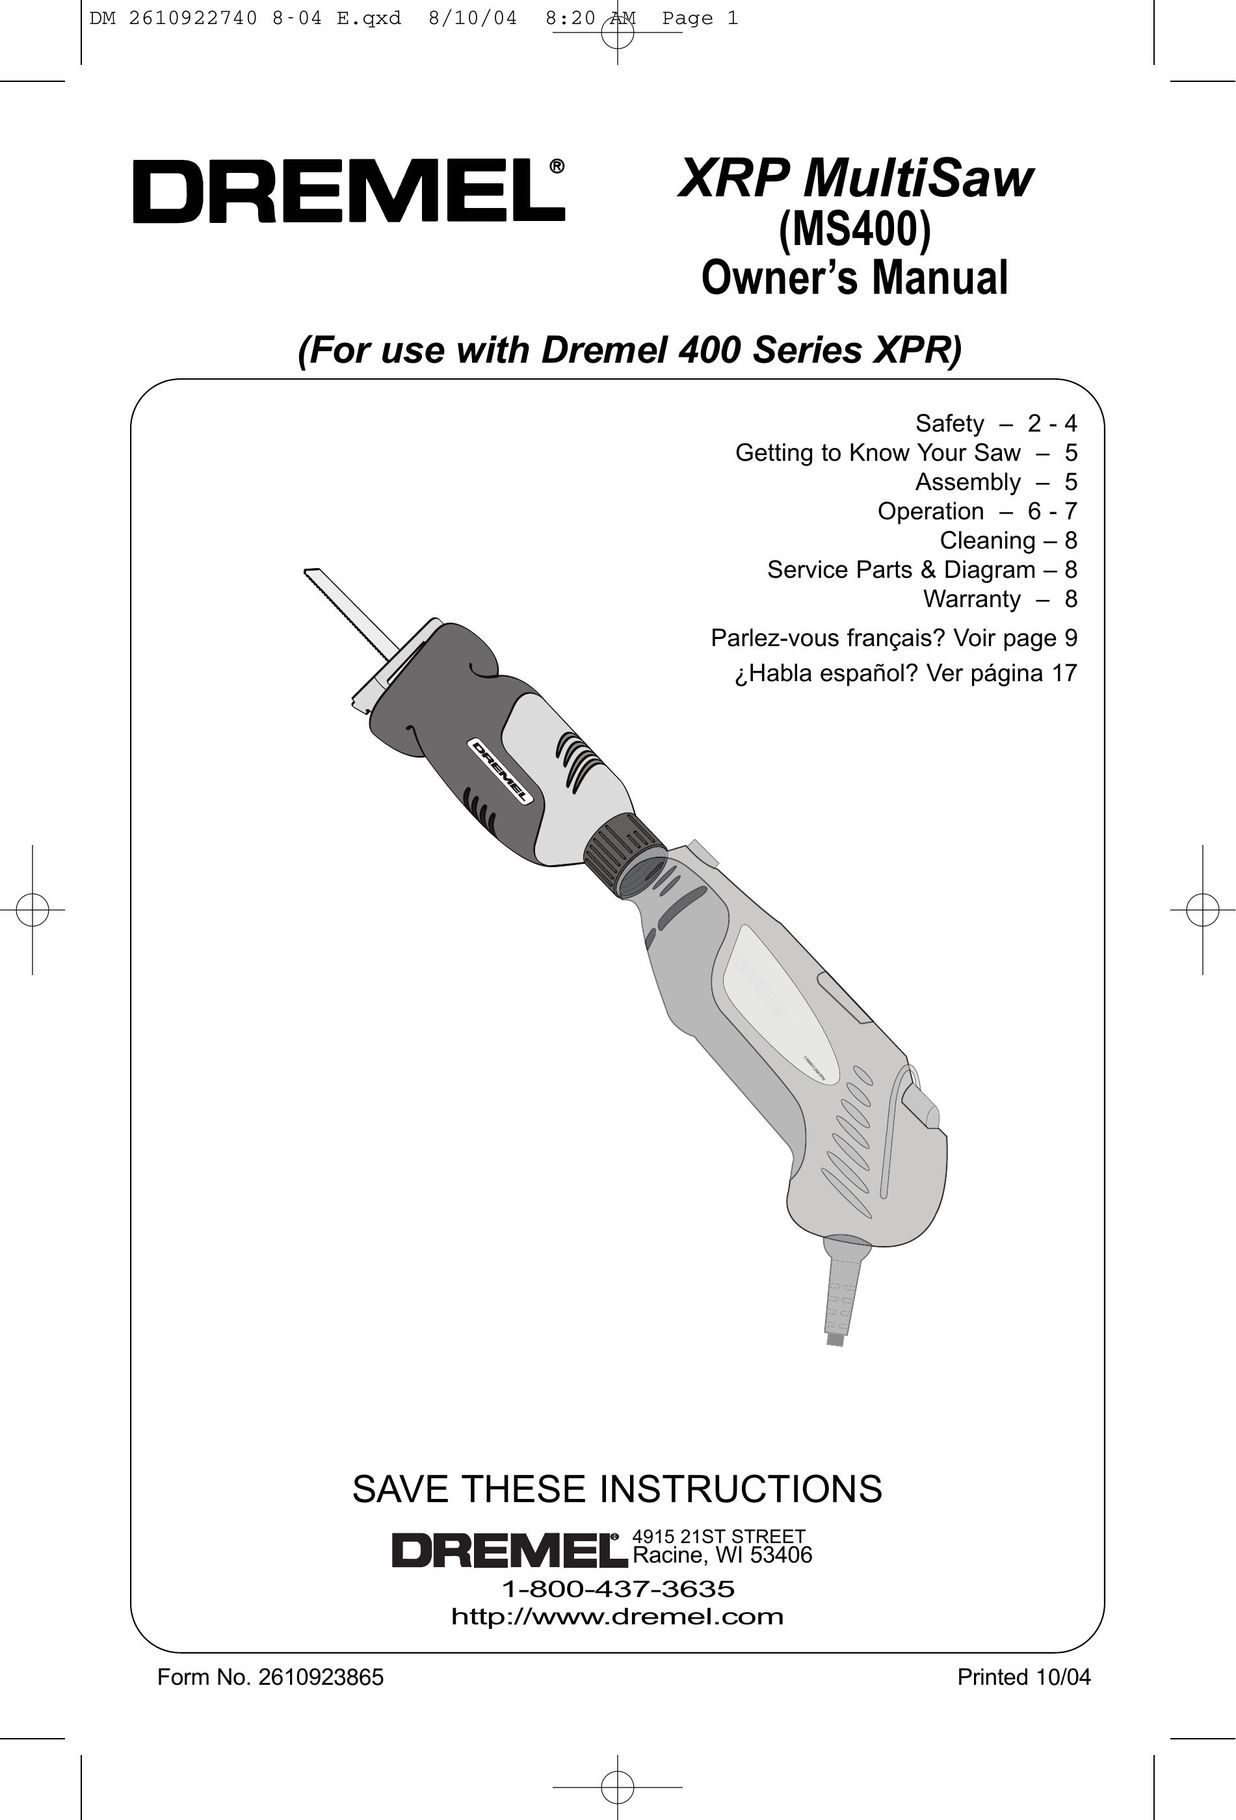 Dremel MS400 Saw User Manual